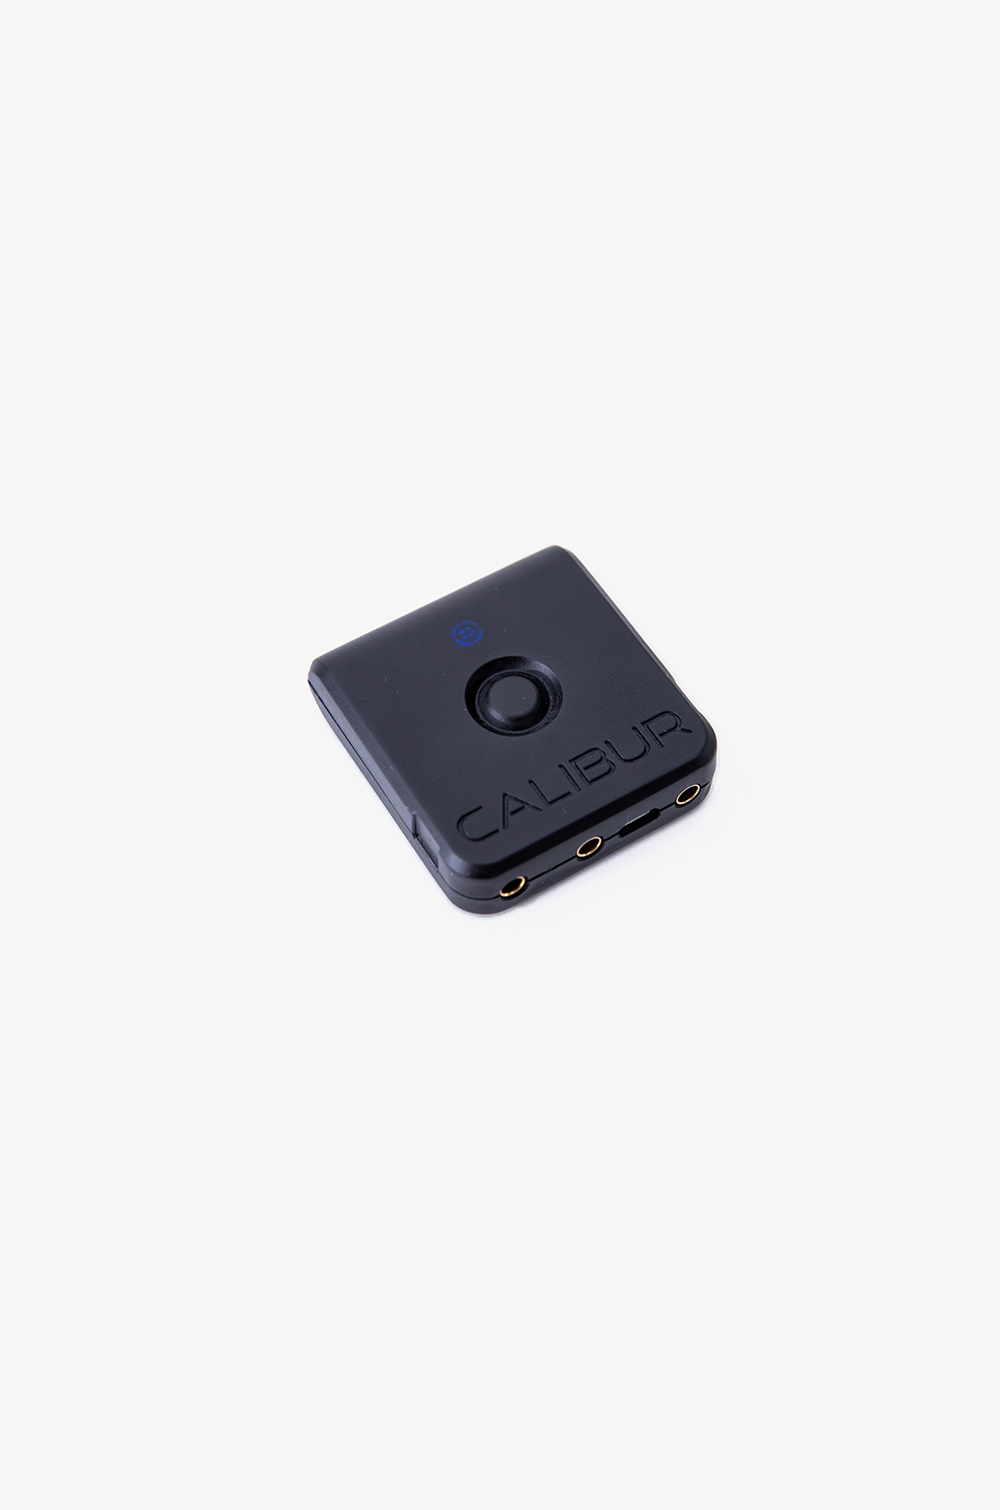 Calibur Wireless Pocket Box (single unit)